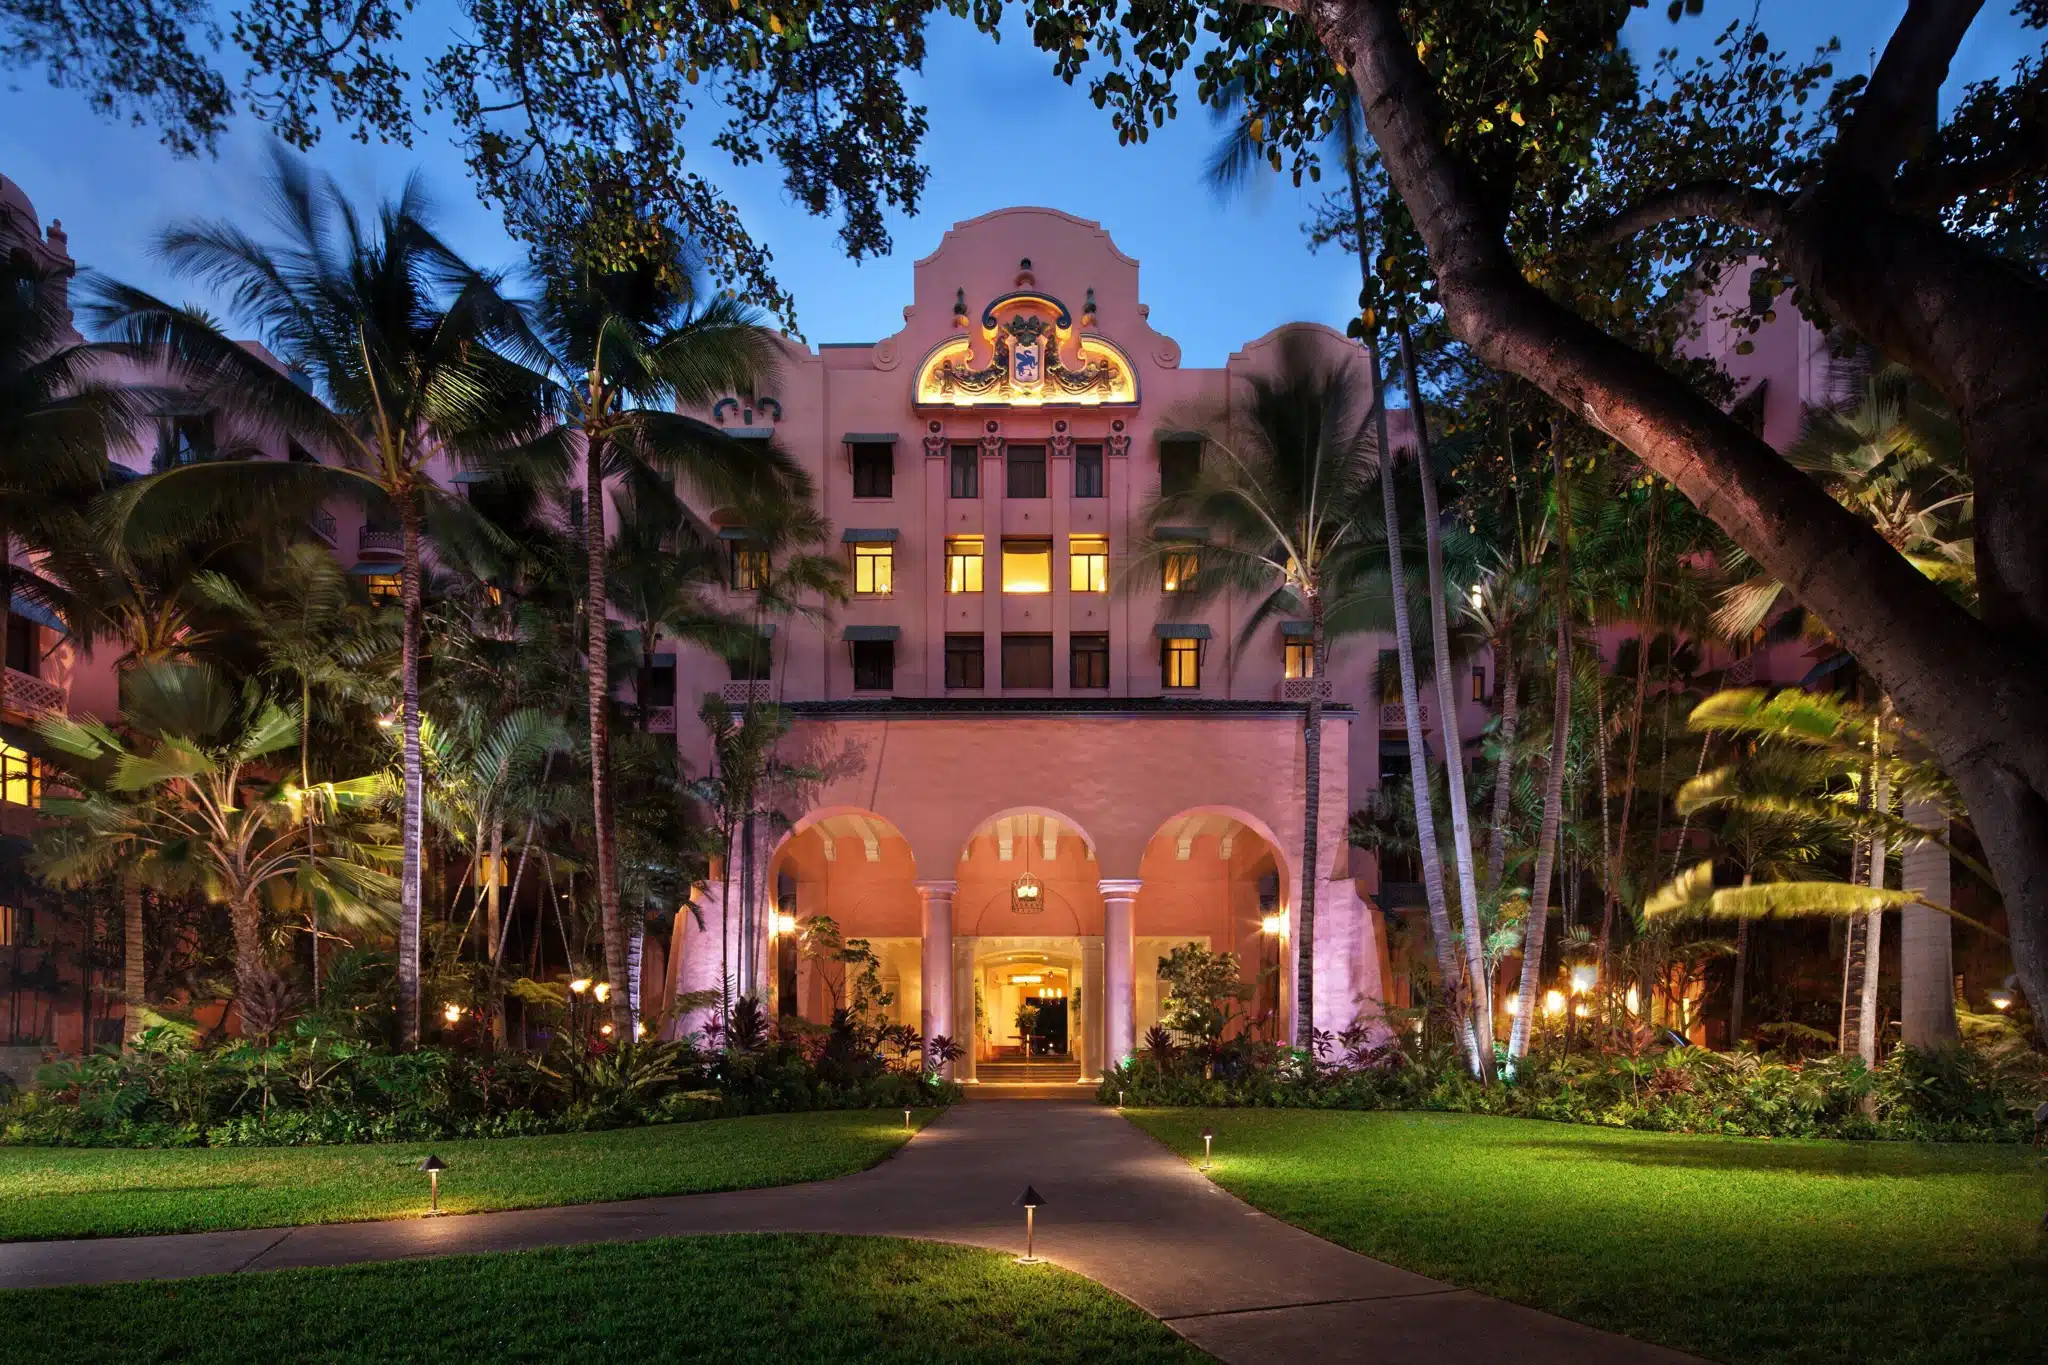 The Royal Hawaiian is a Hotel located in the city of Honolulu on Oahu, Hawaii